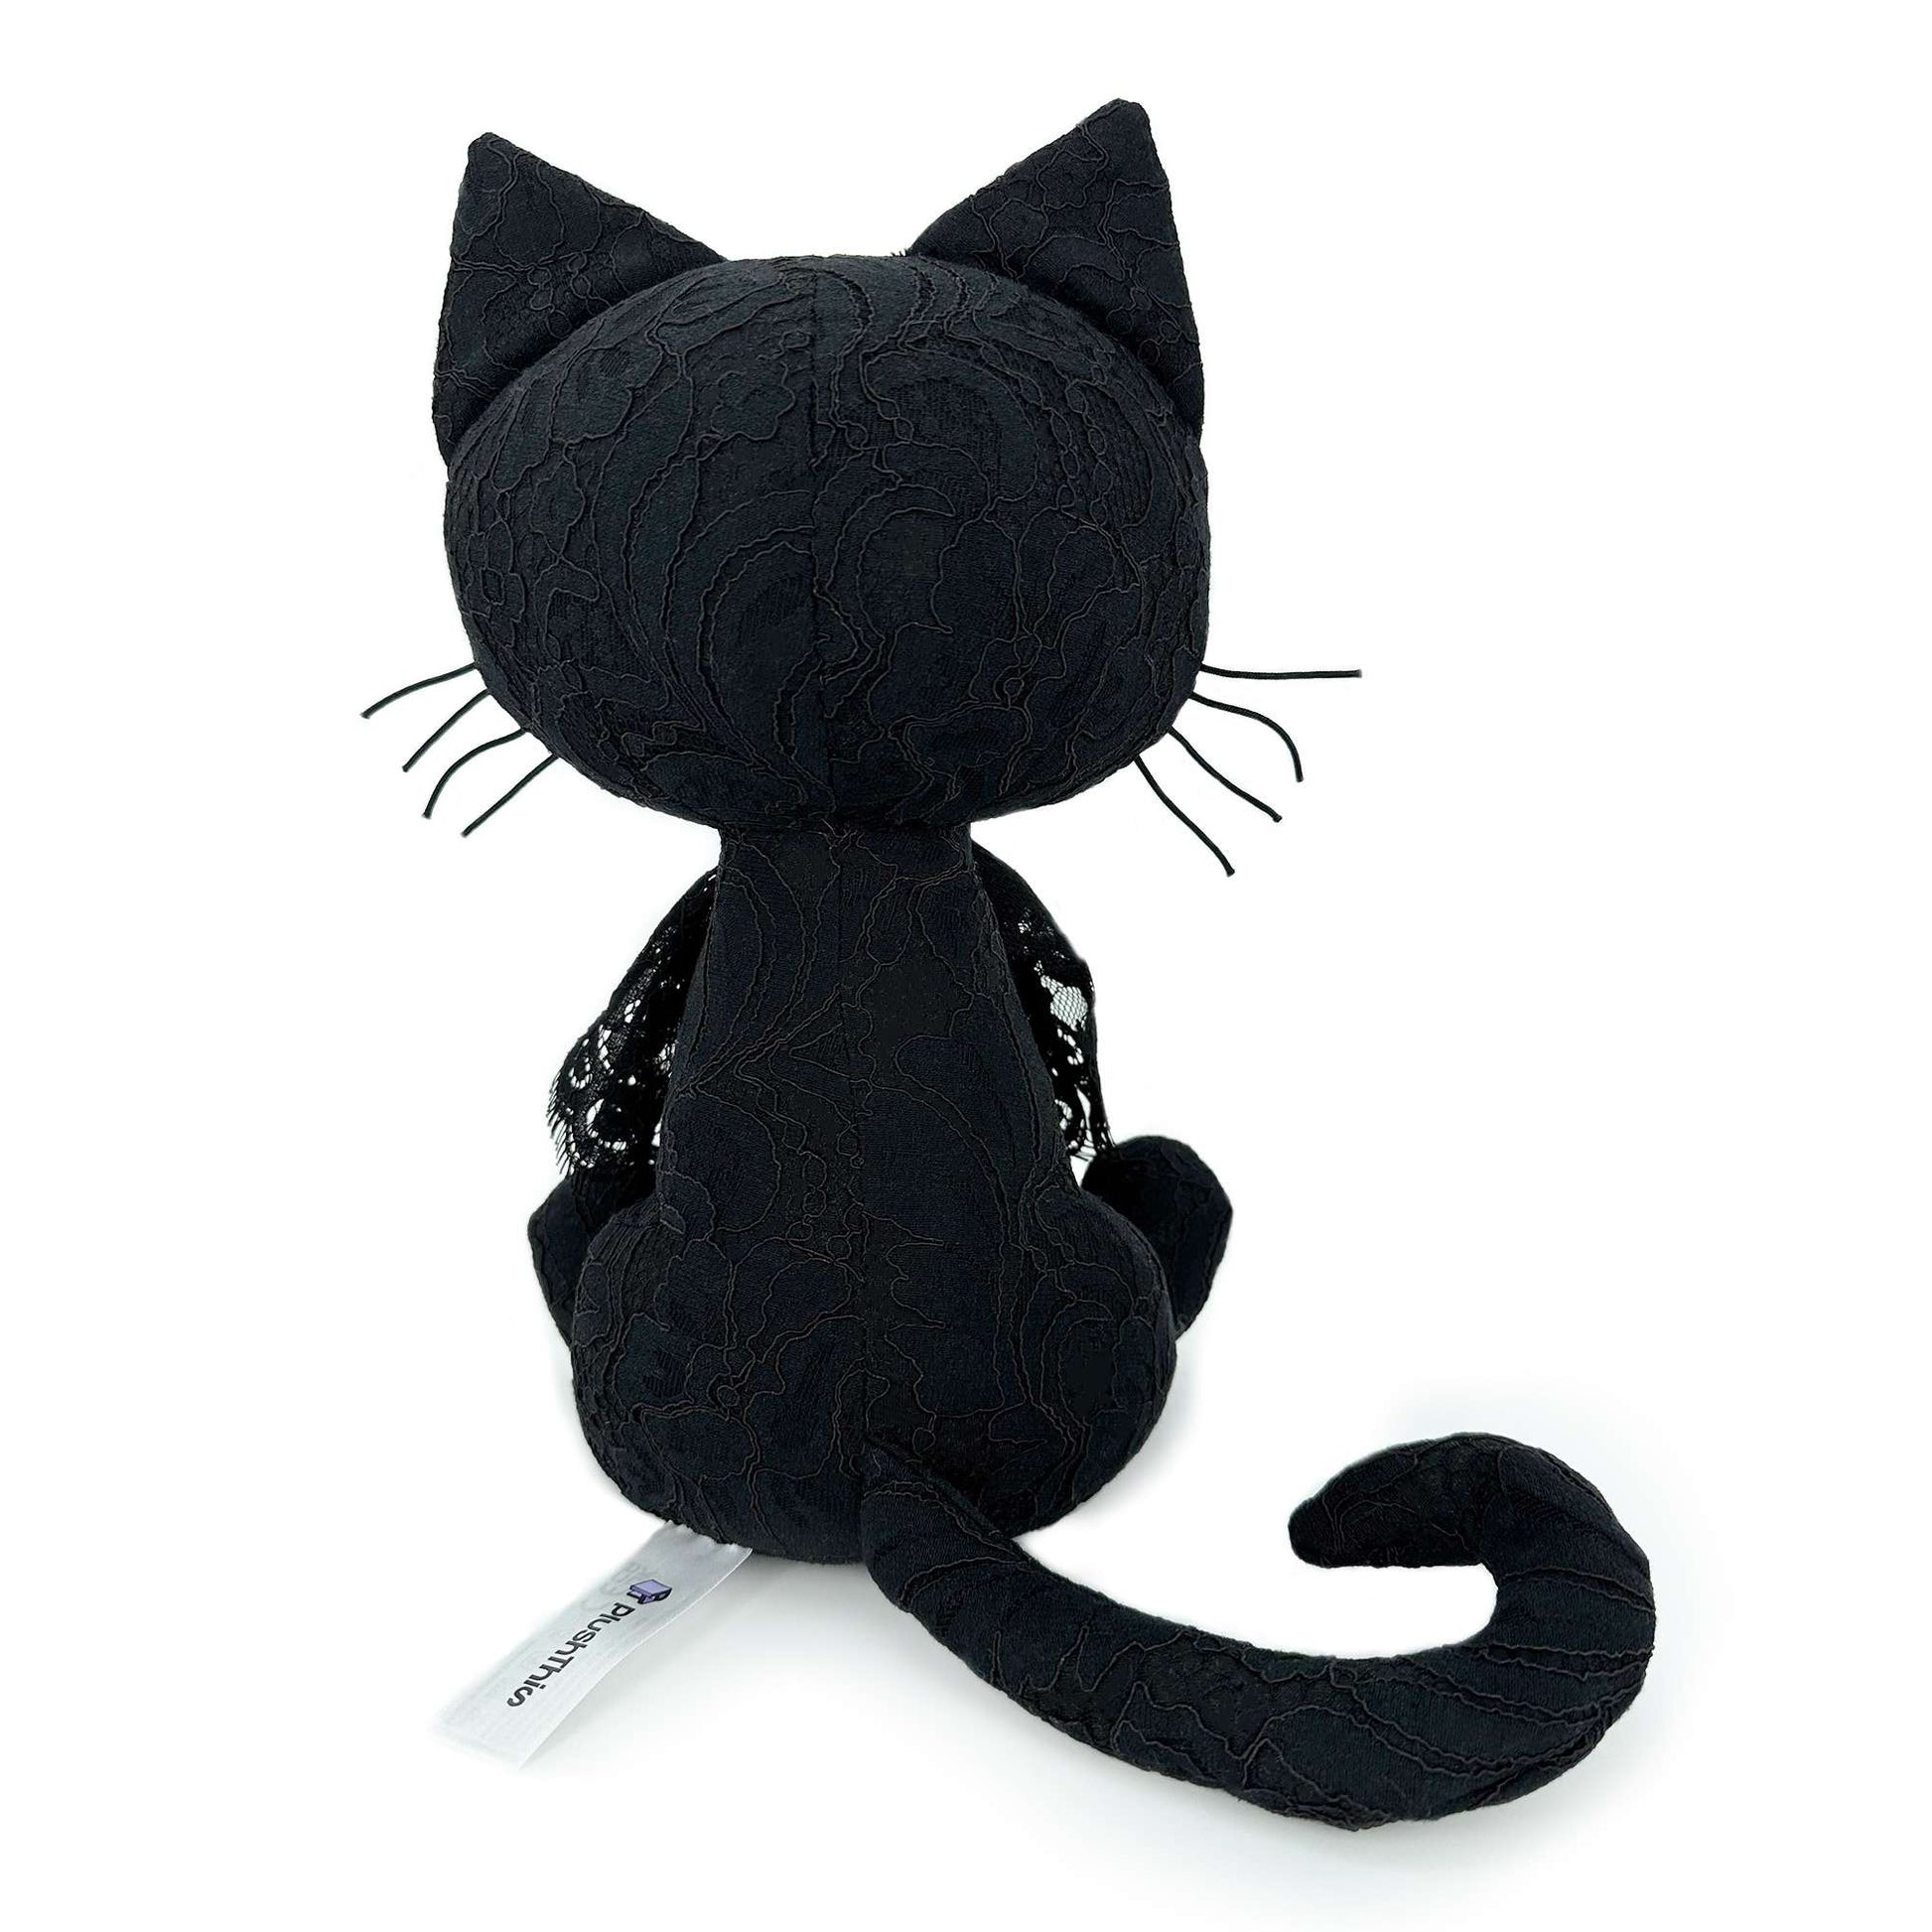 Bombay Black Cat stuffed animal back view